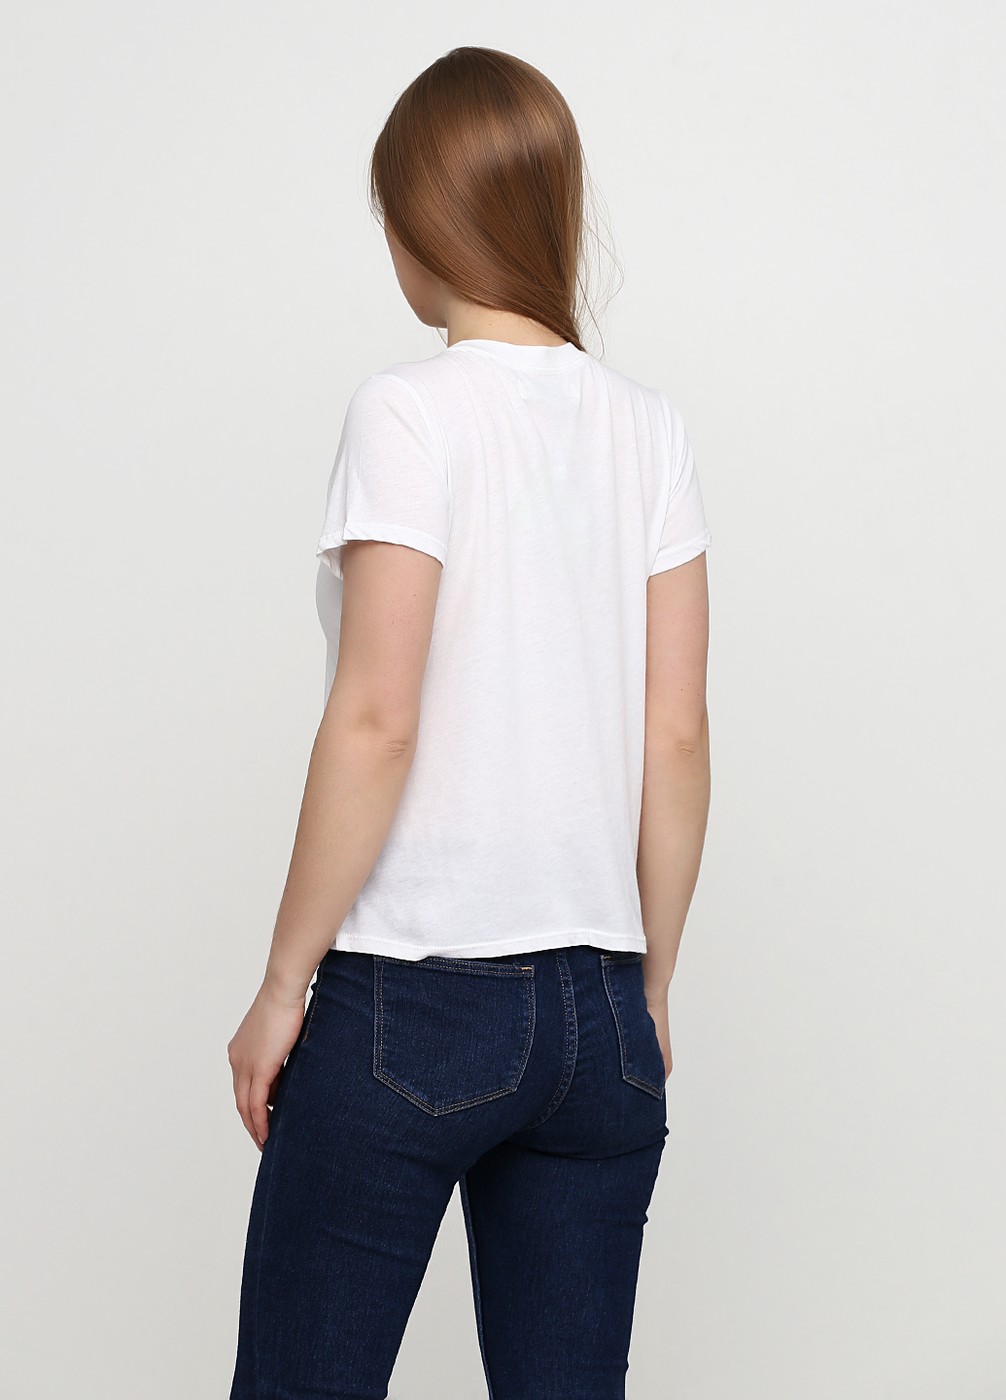 Белая футболка - женская футболка Abercrombie & Fitch